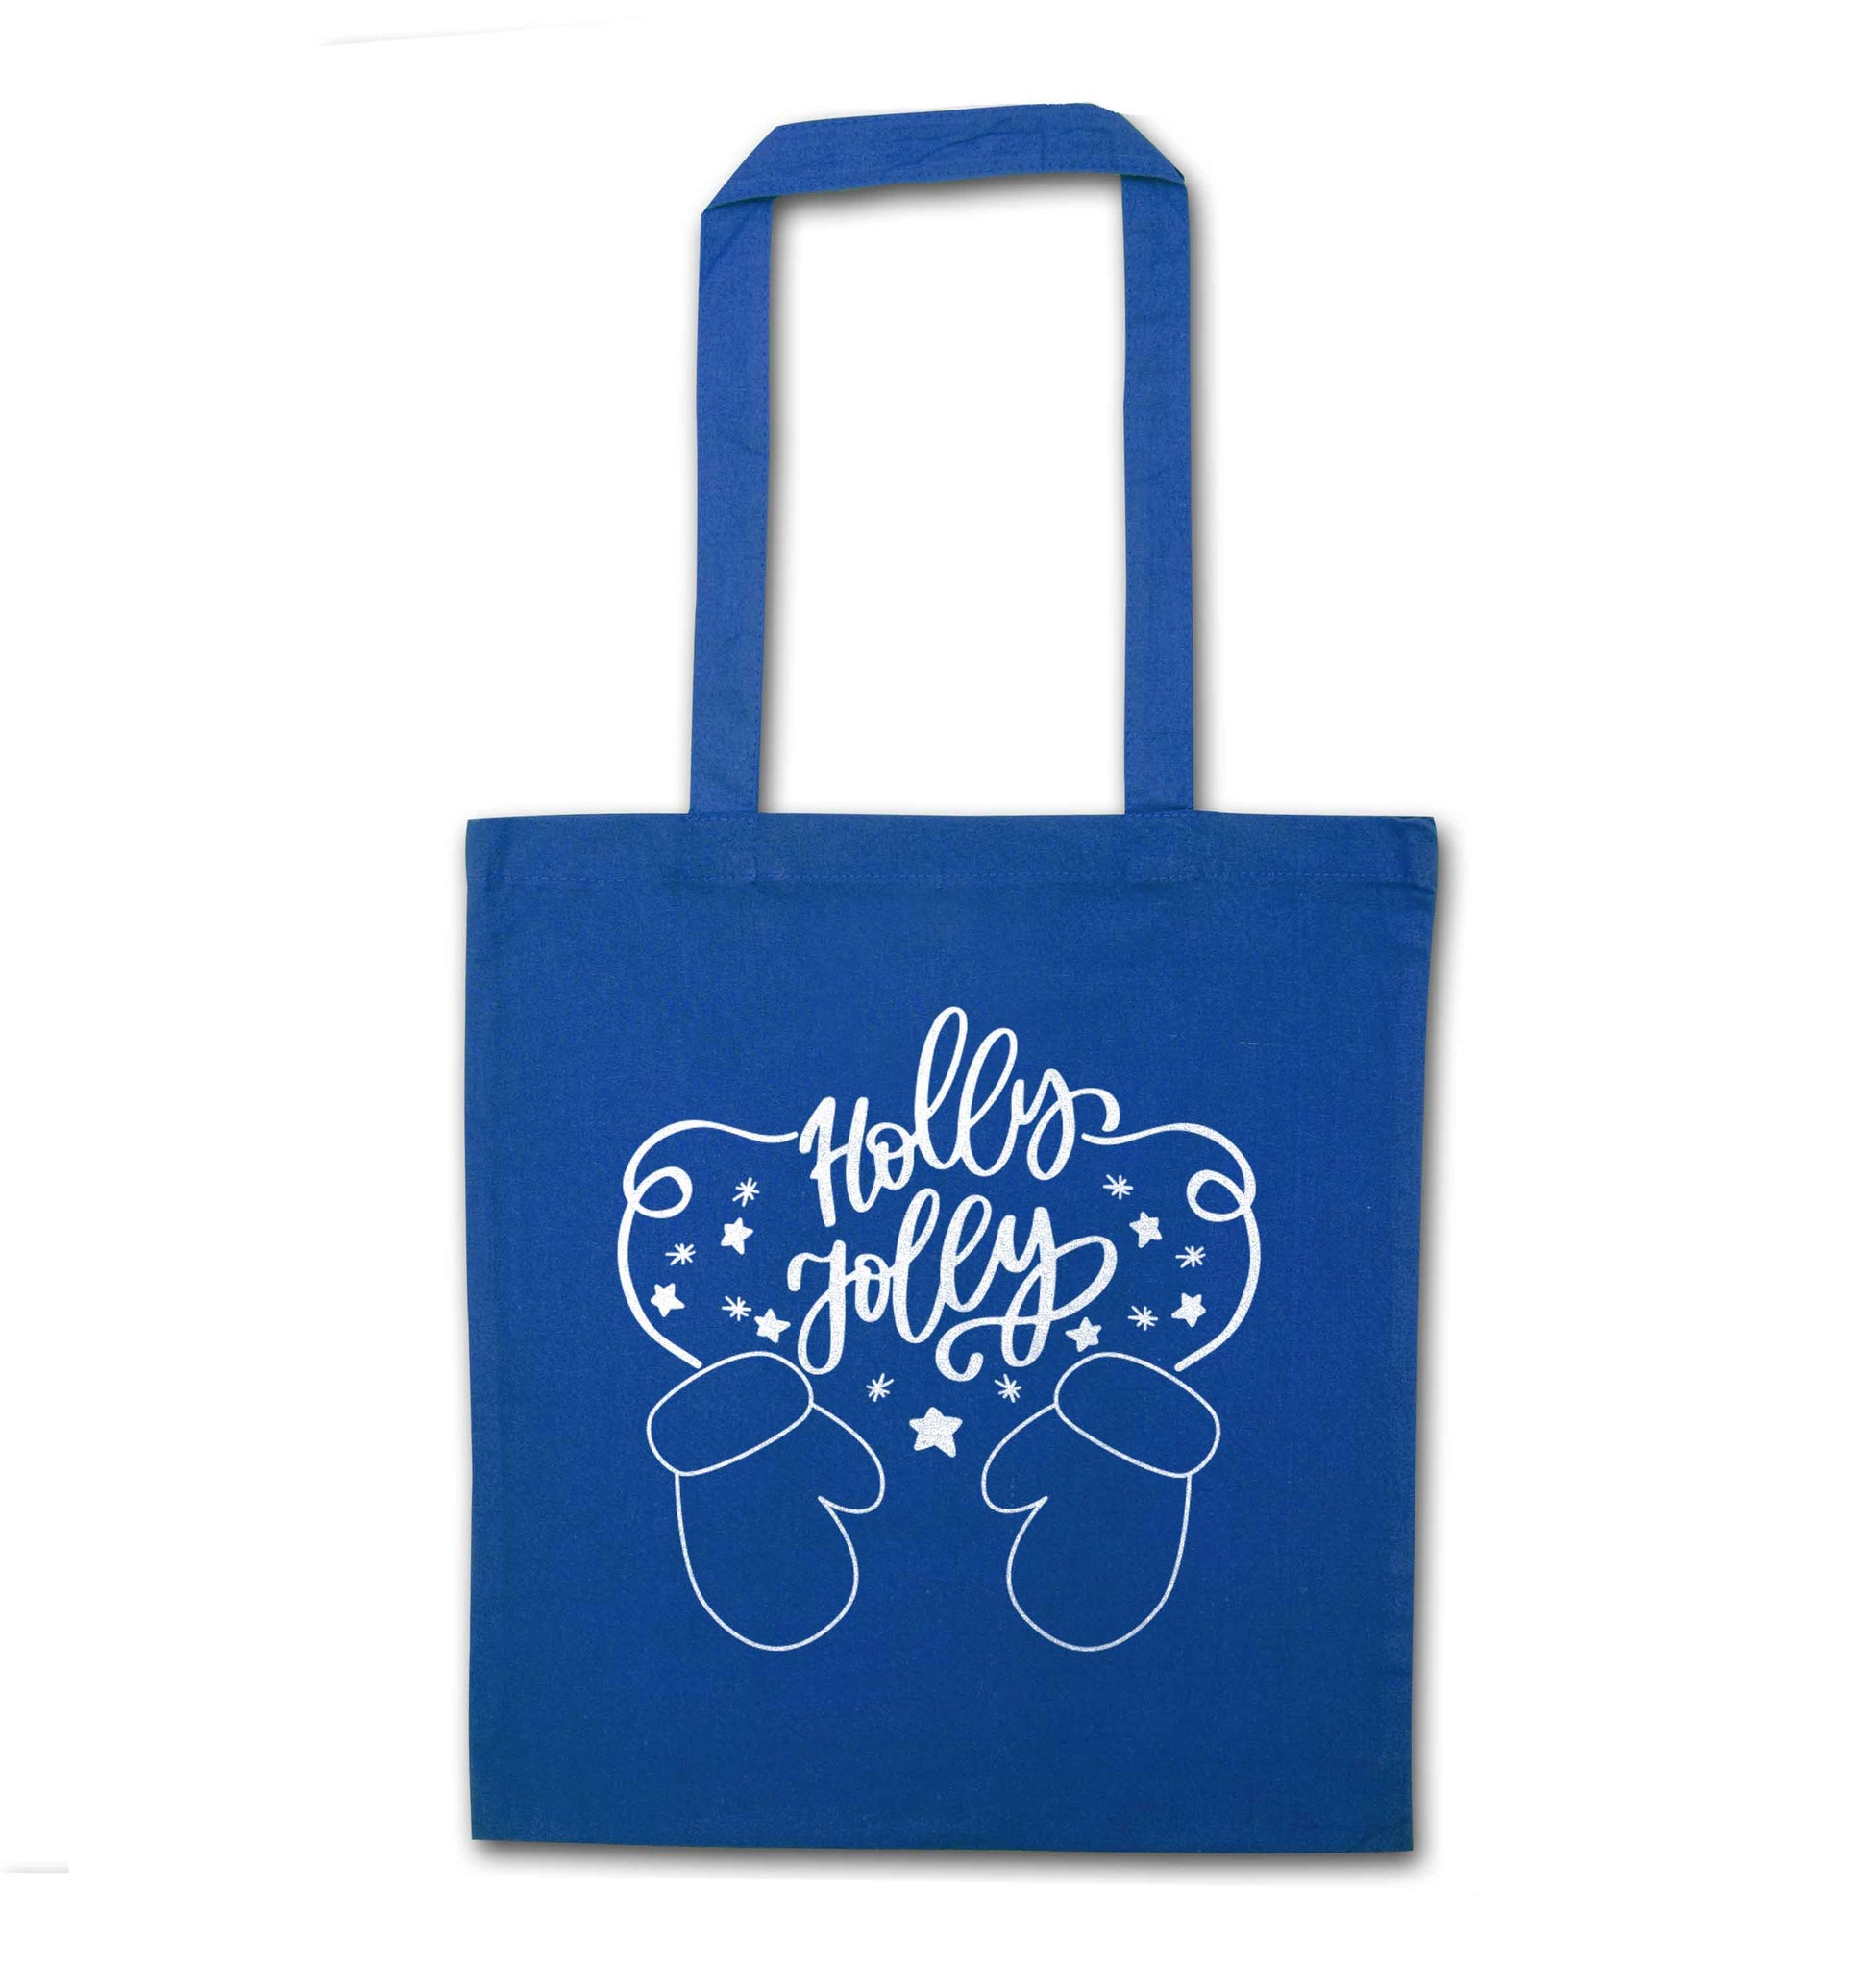 Holly jolly blue tote bag